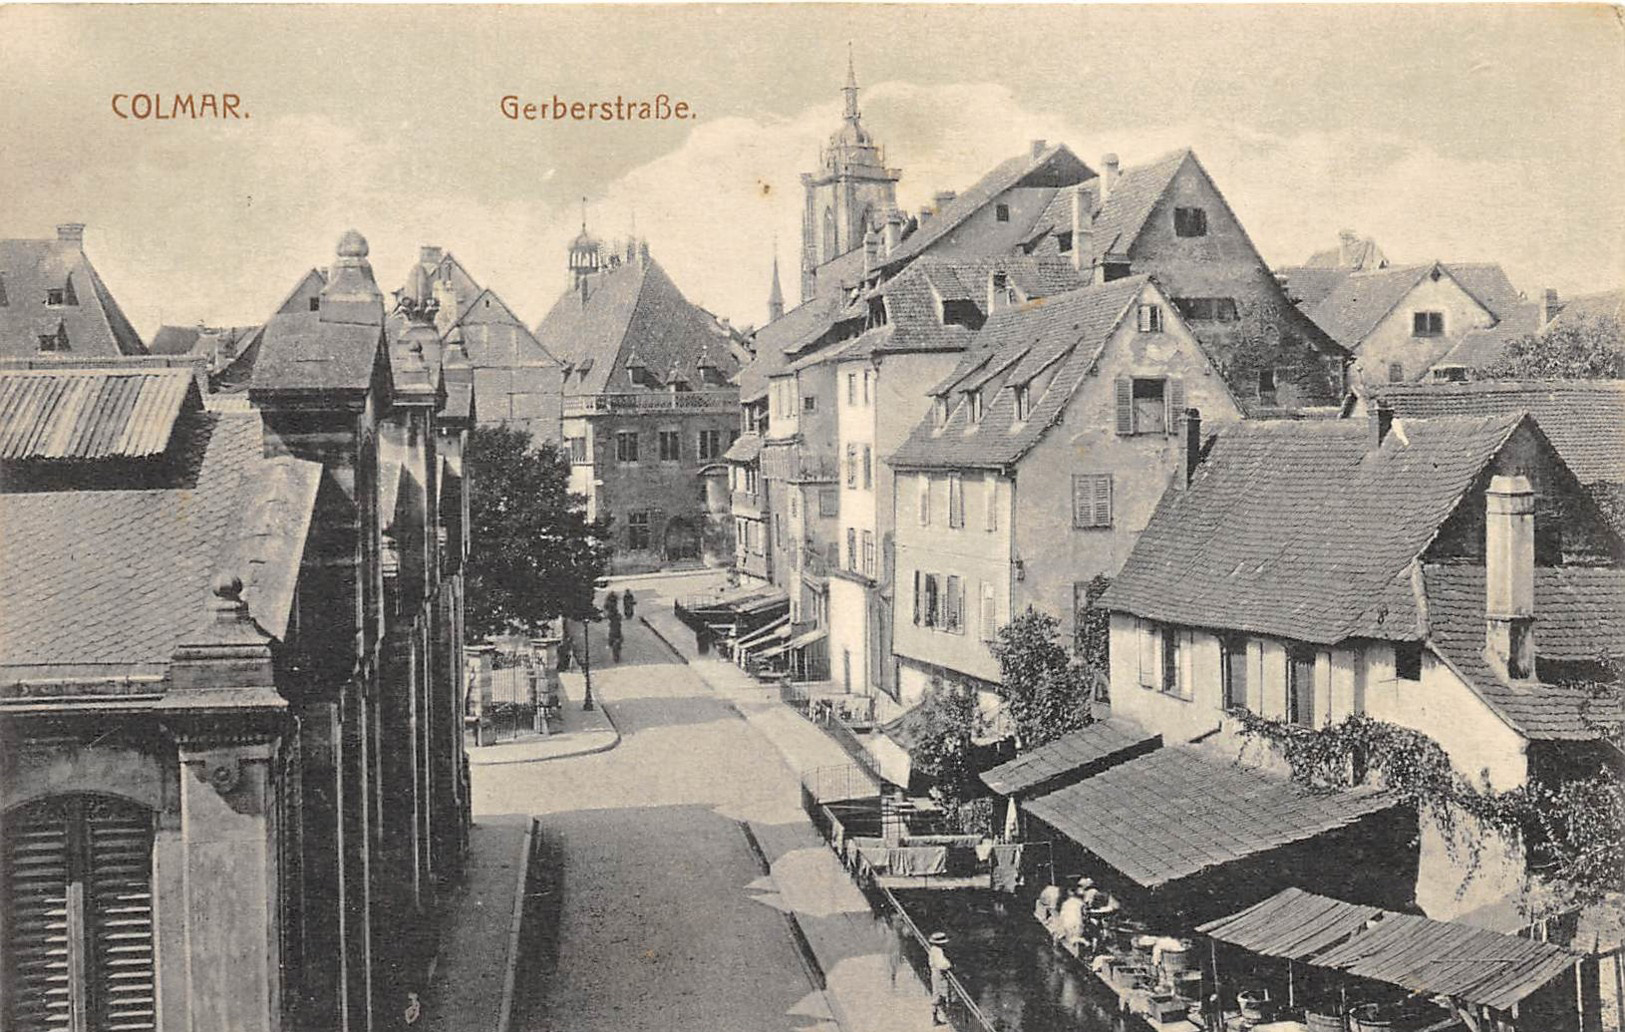 1854 - Cholera in Colmar